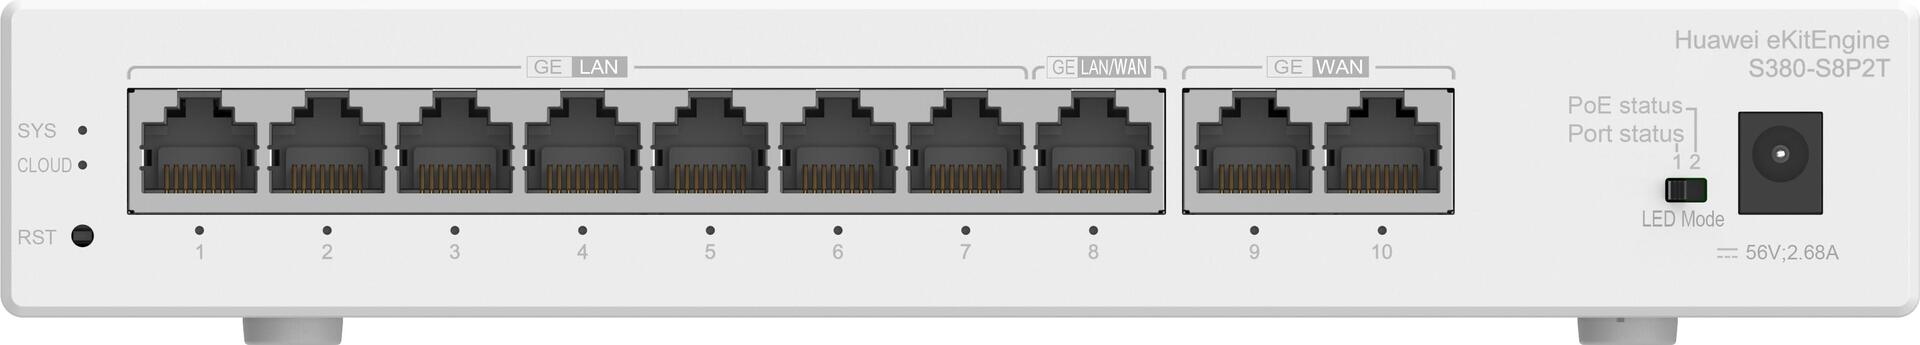 Huawei S380-S8P2T Gigabit Ethernet (10/100/1000) Power over Ethernet (PoE) Grau (98012180)